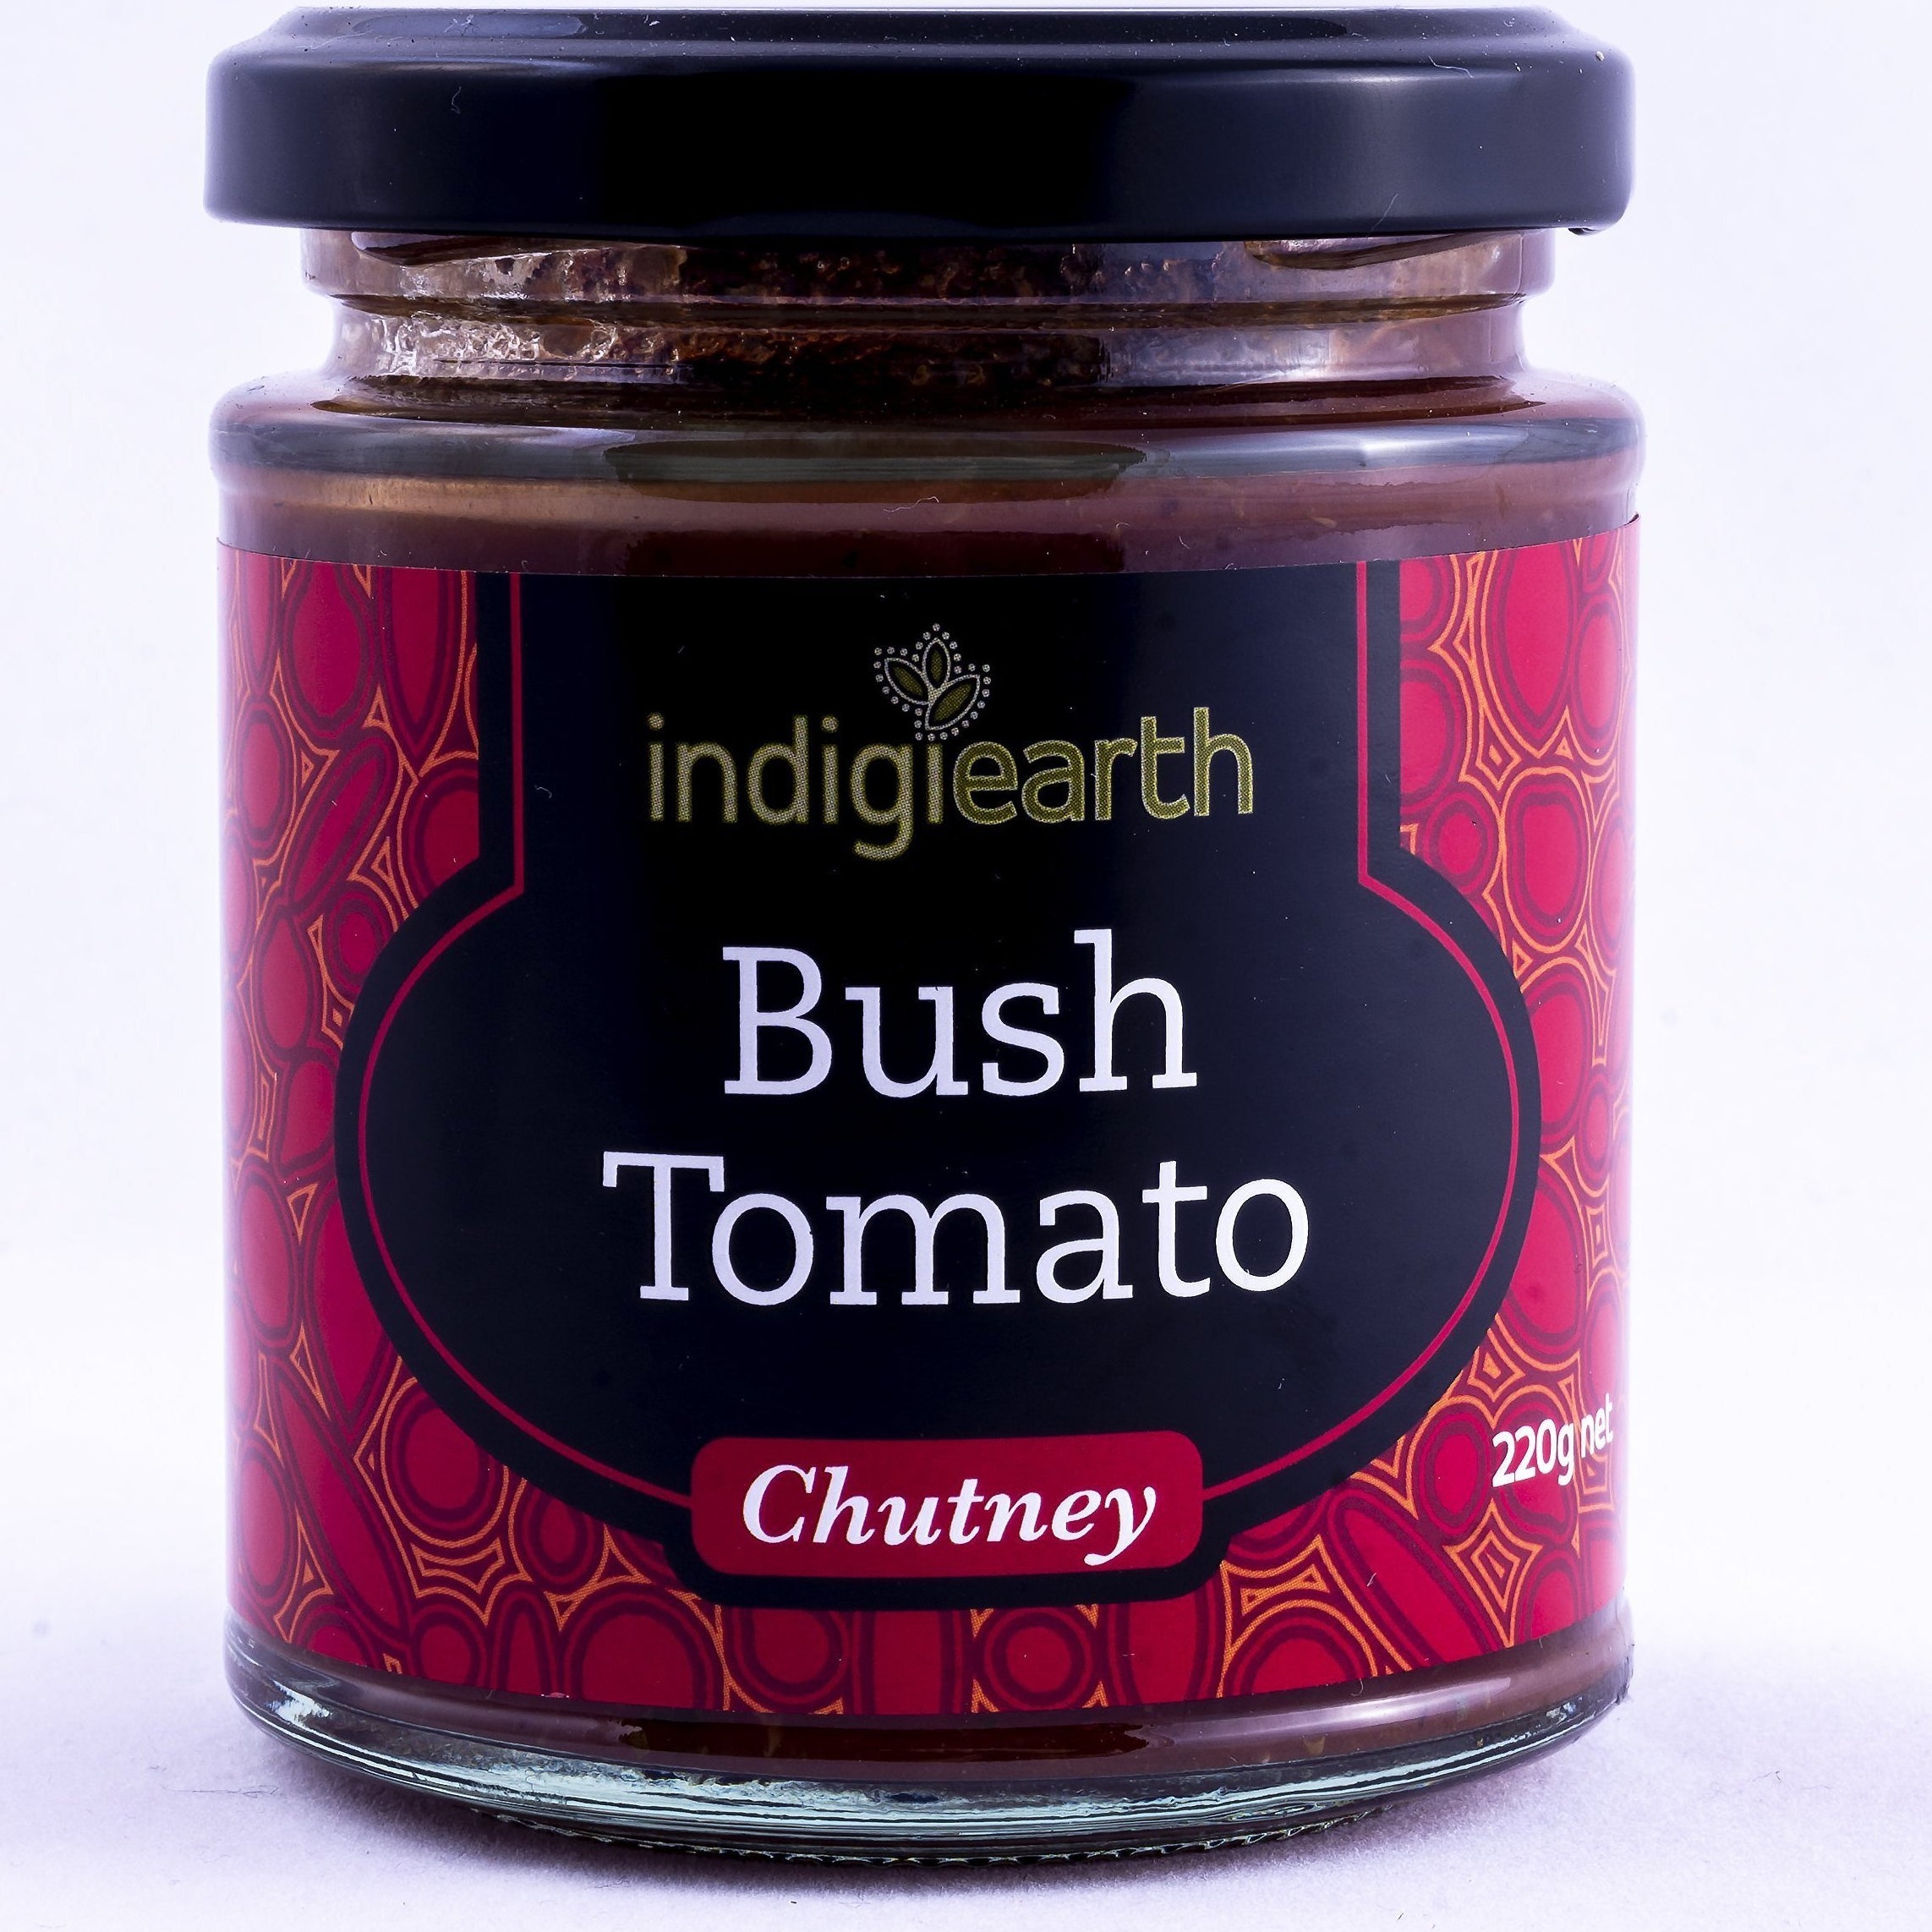 Indigiearth Bush Tomato Chutney